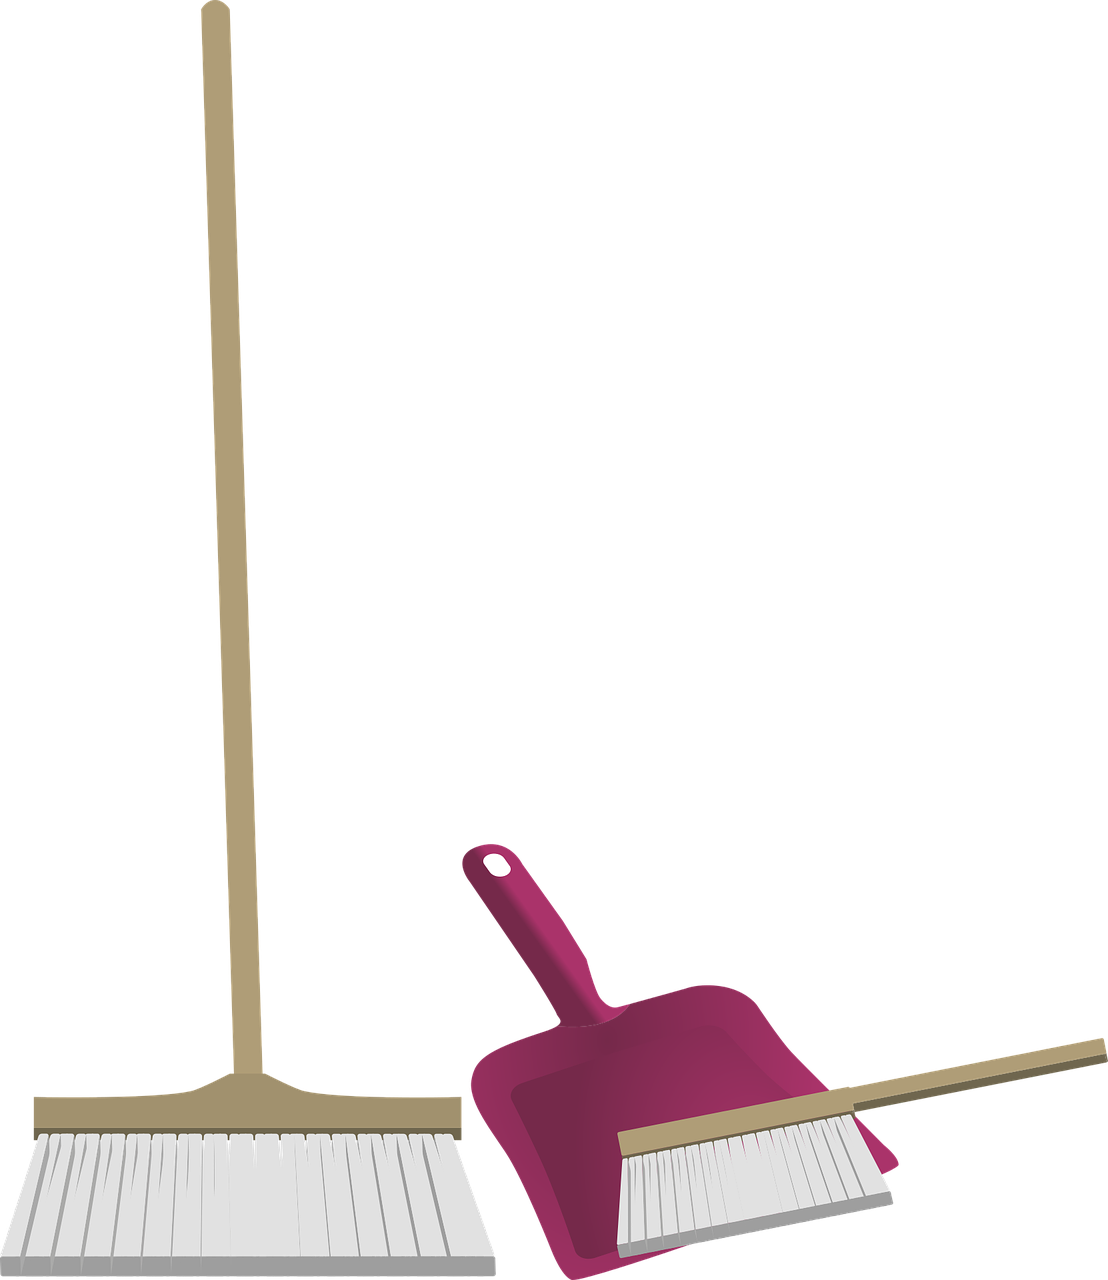 house cleaning broom hand brush free photo